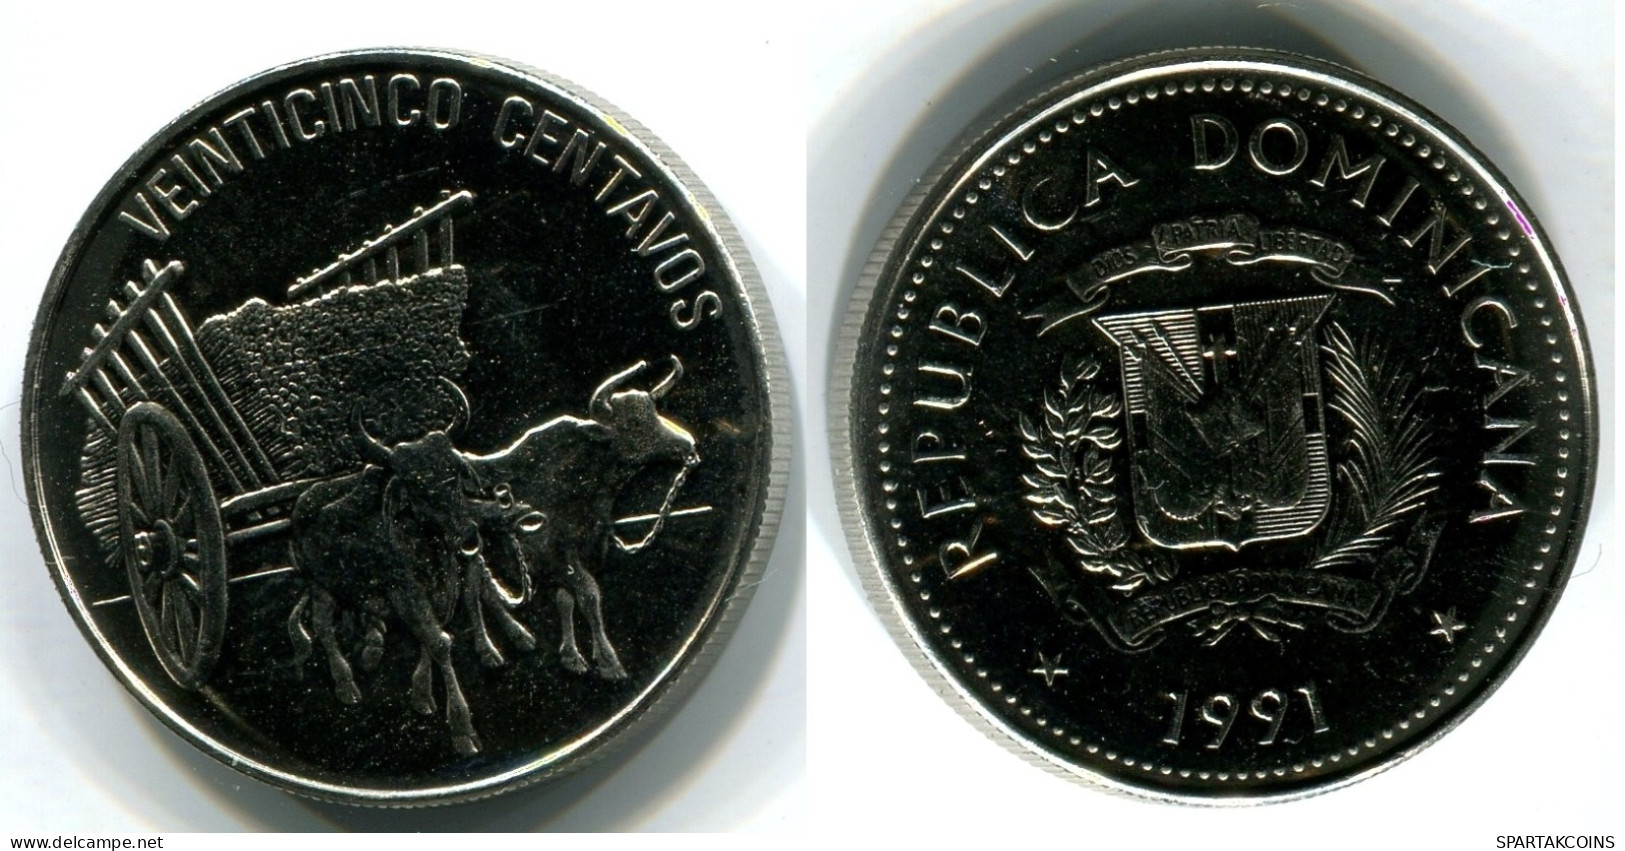 25 CENTAVOS 1991 REPUBLICA DOMINICANA UNC Coin #W10800.U.A - Dominicaanse Republiek